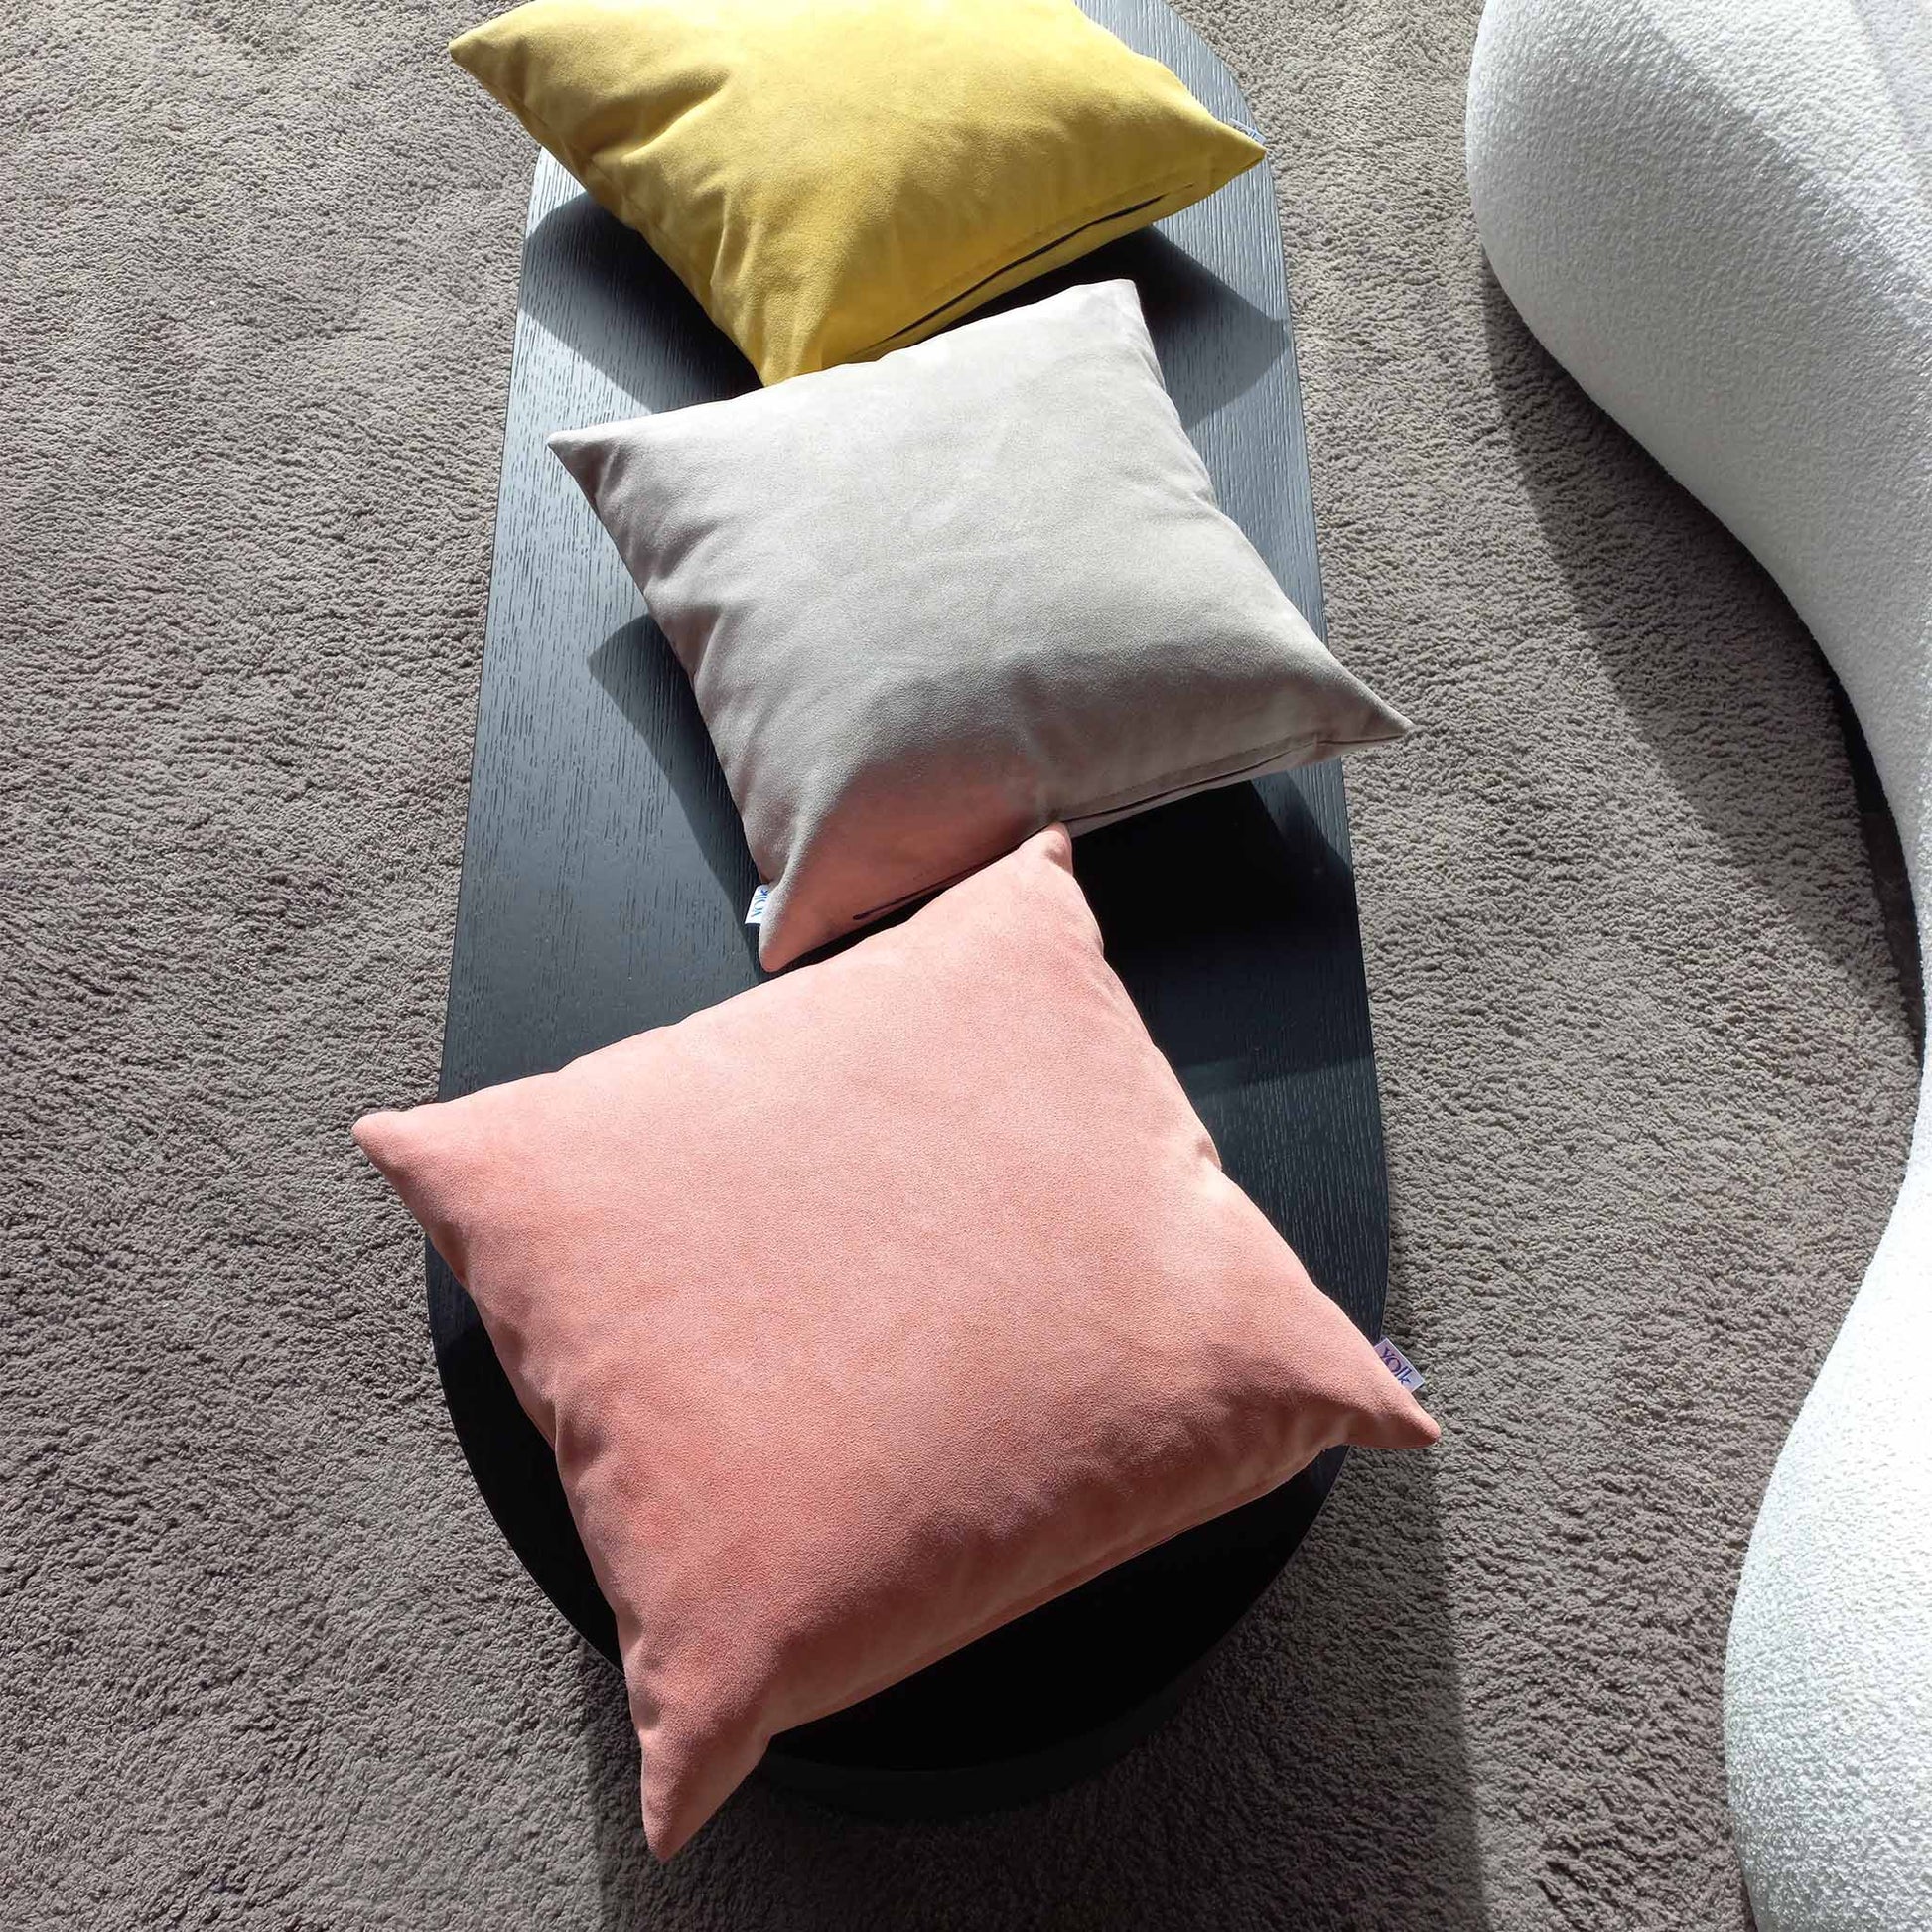 Decorative cushions on a table